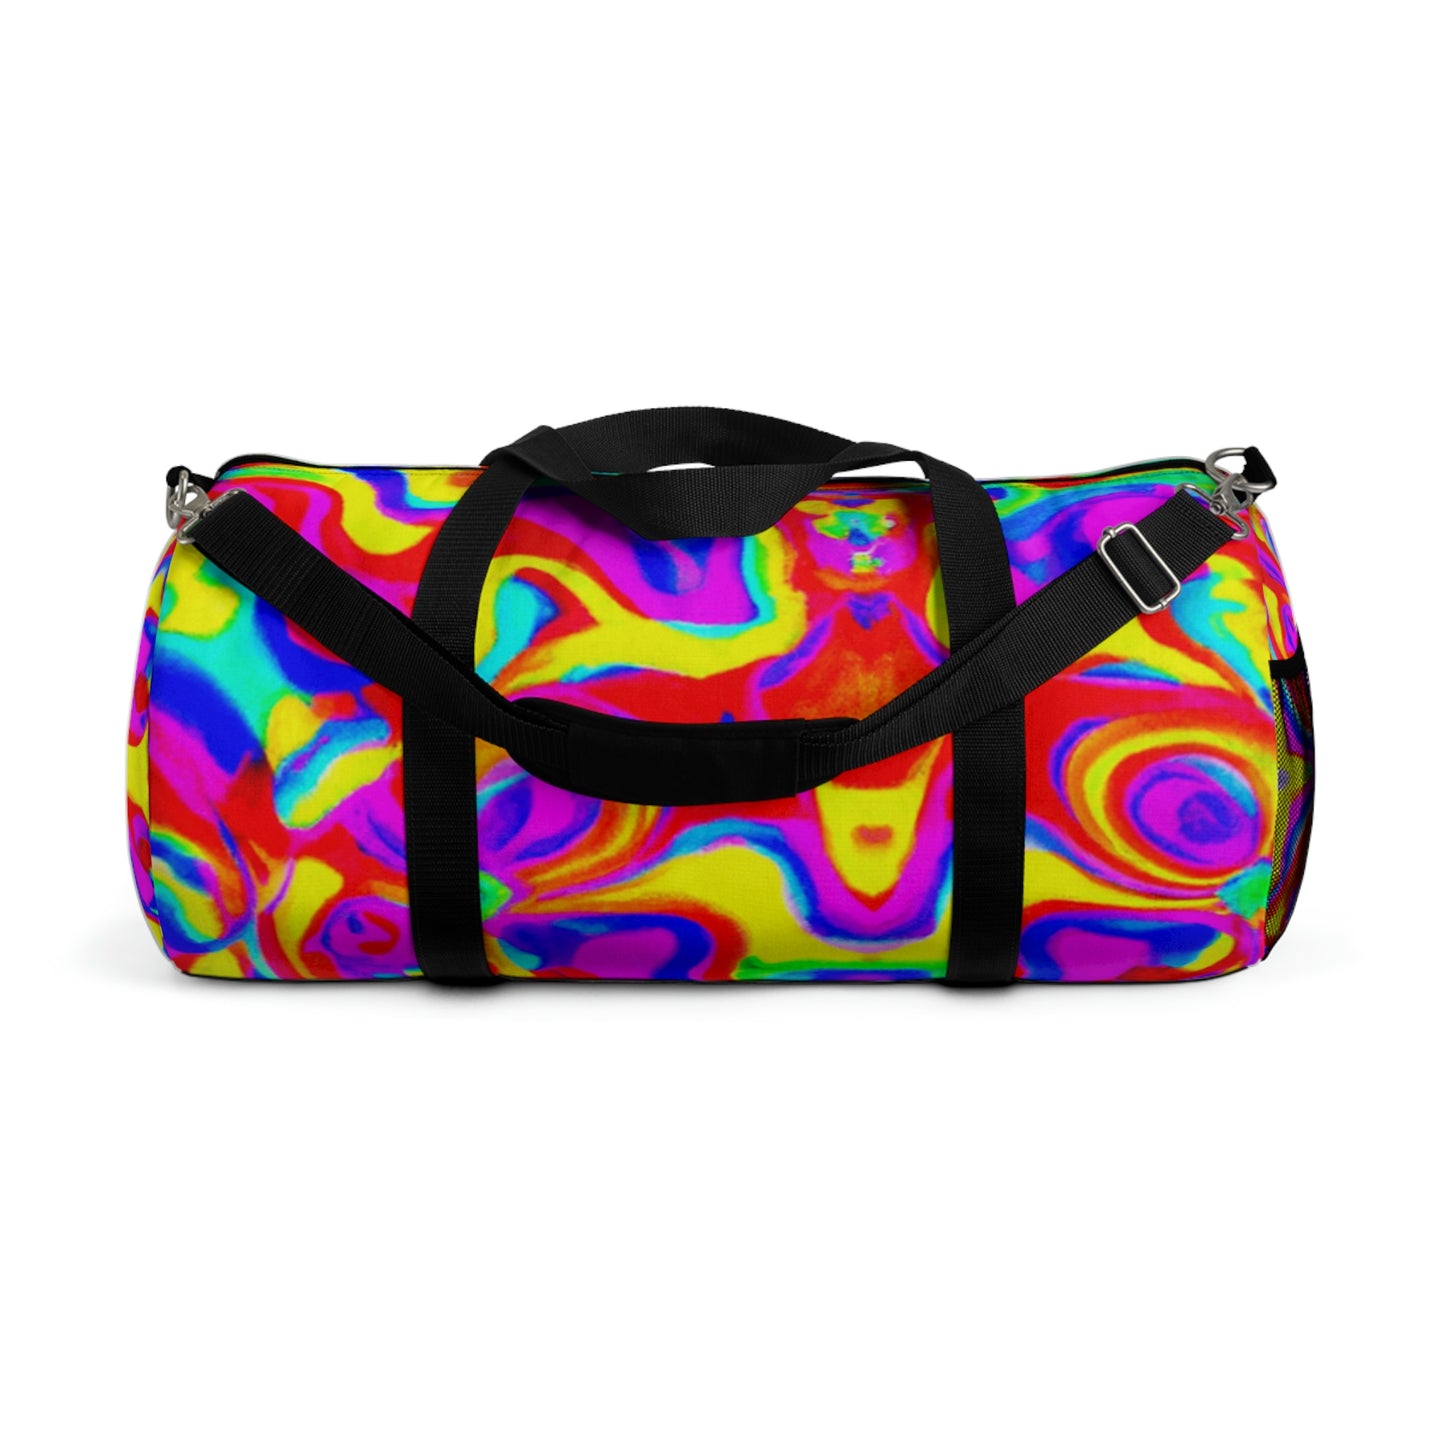 Saville Designs - Psychedelic Duffel Bag